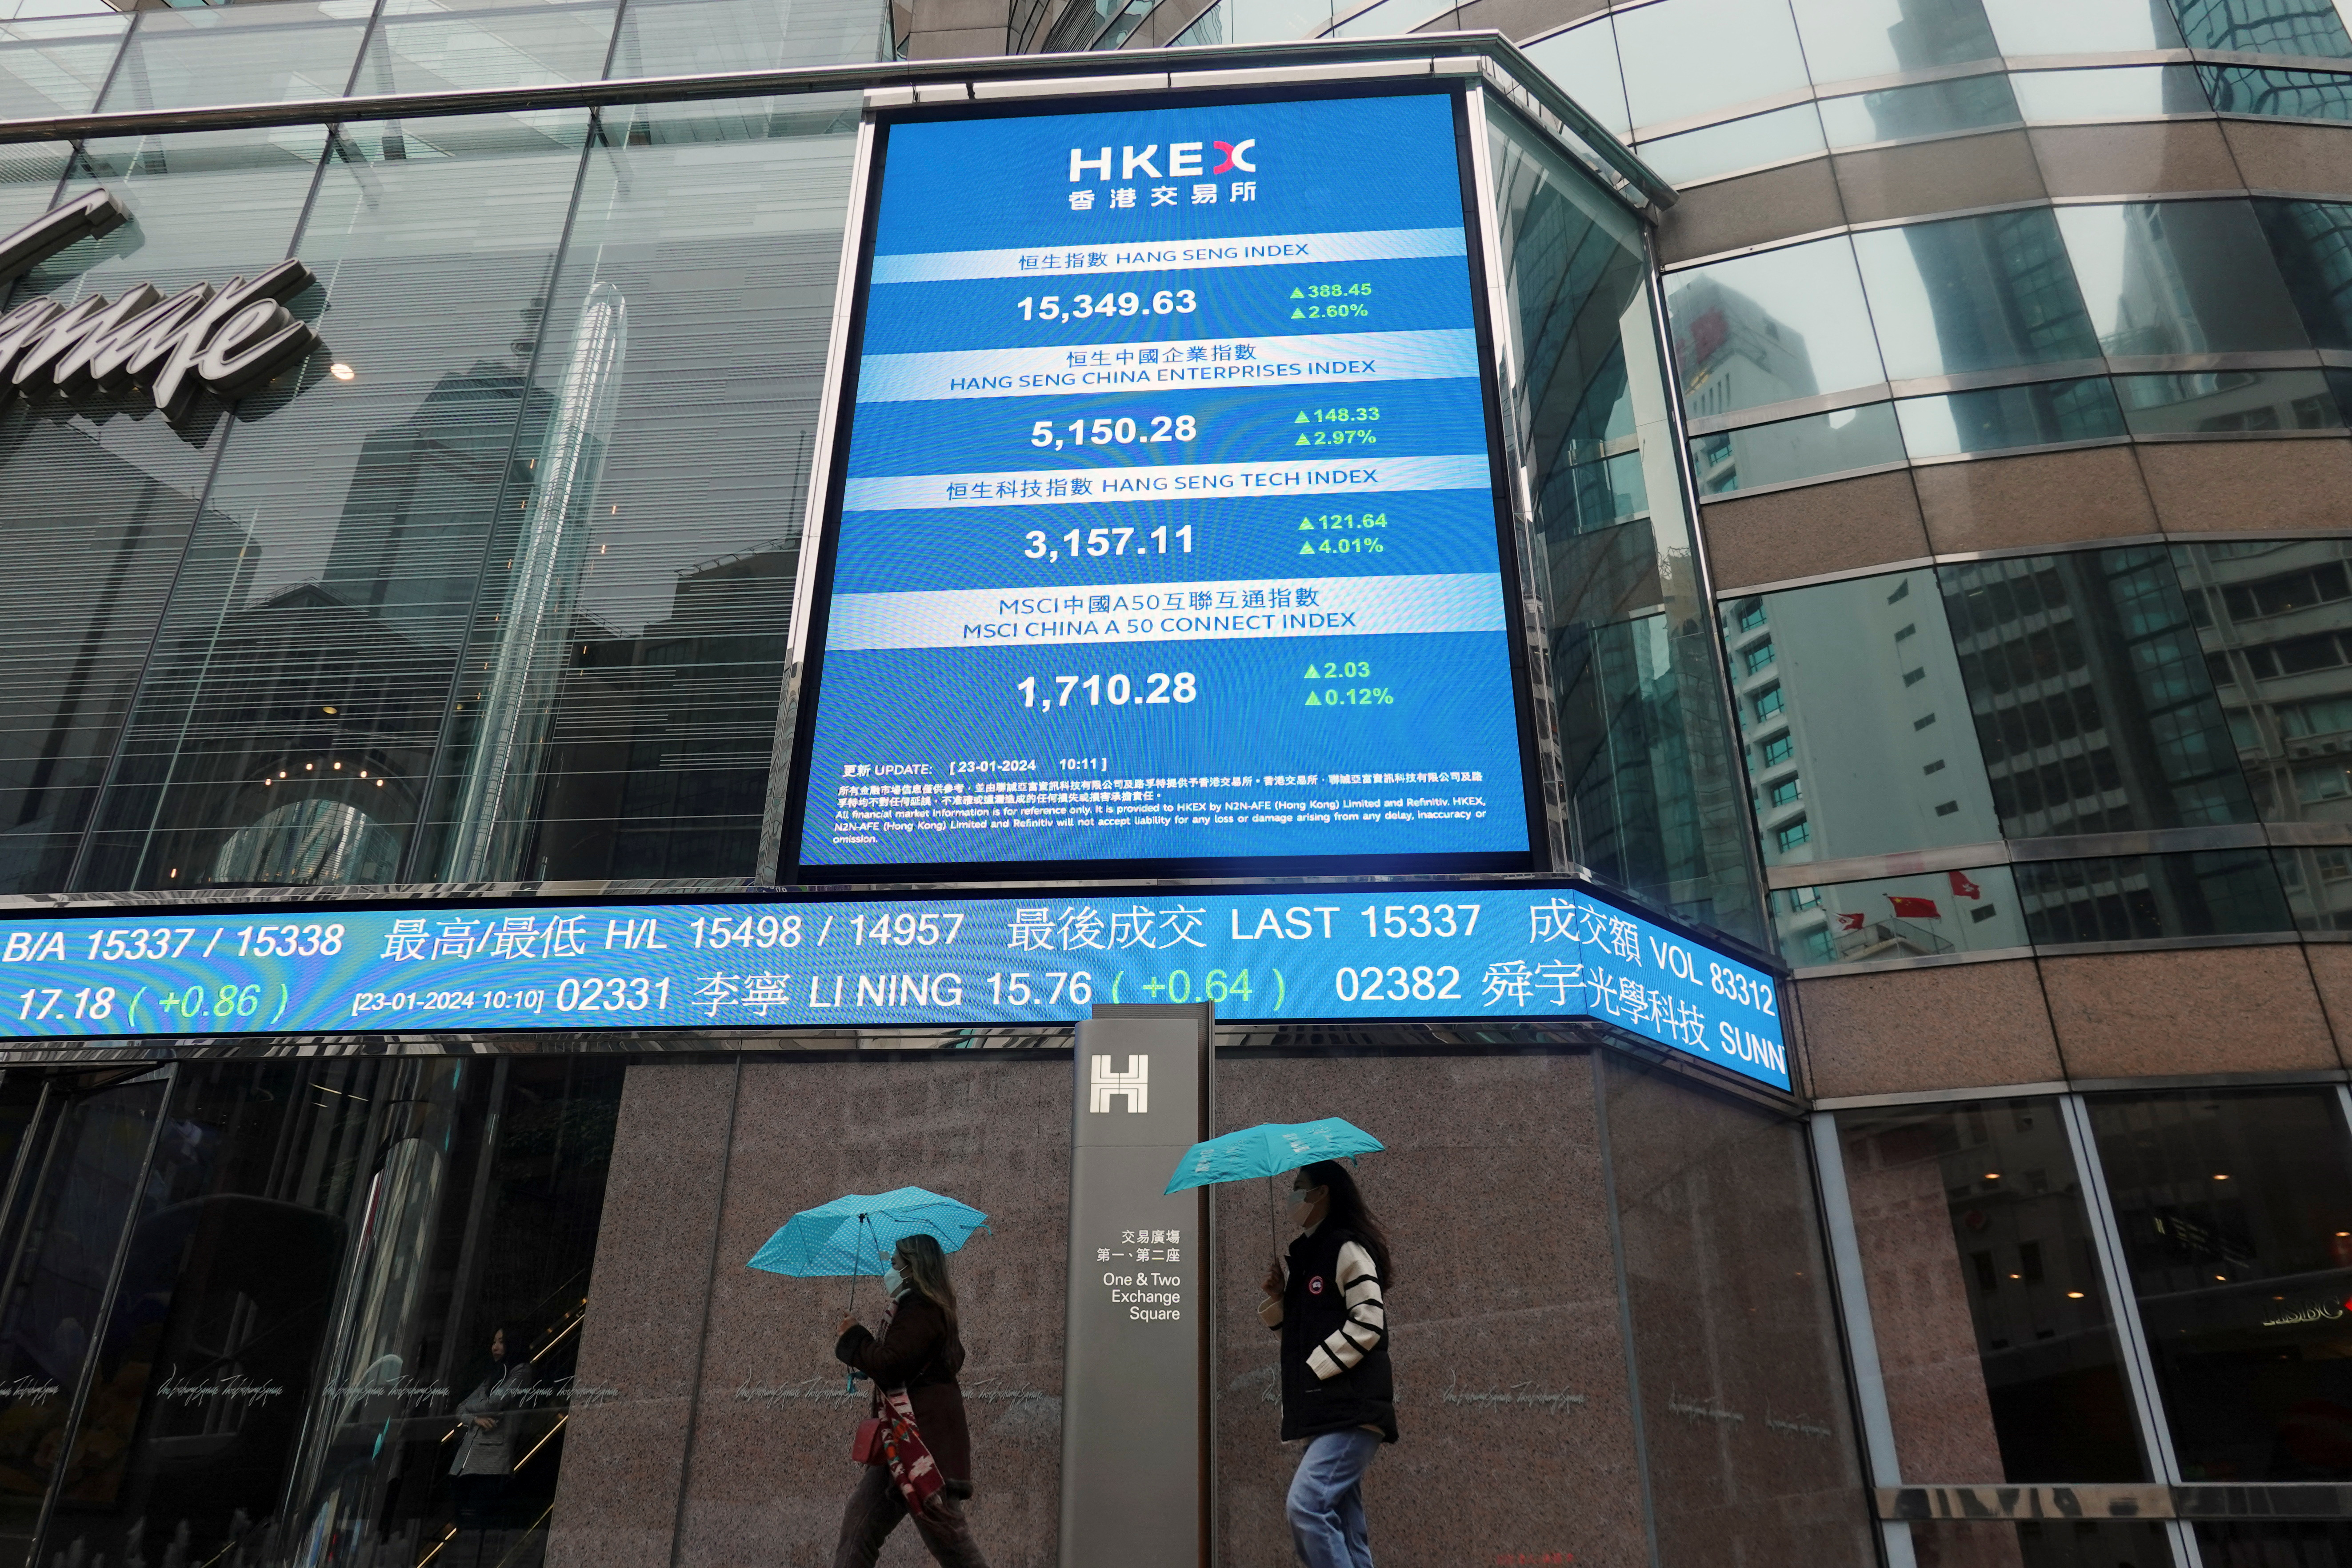 Display of stock information in Hong Kong